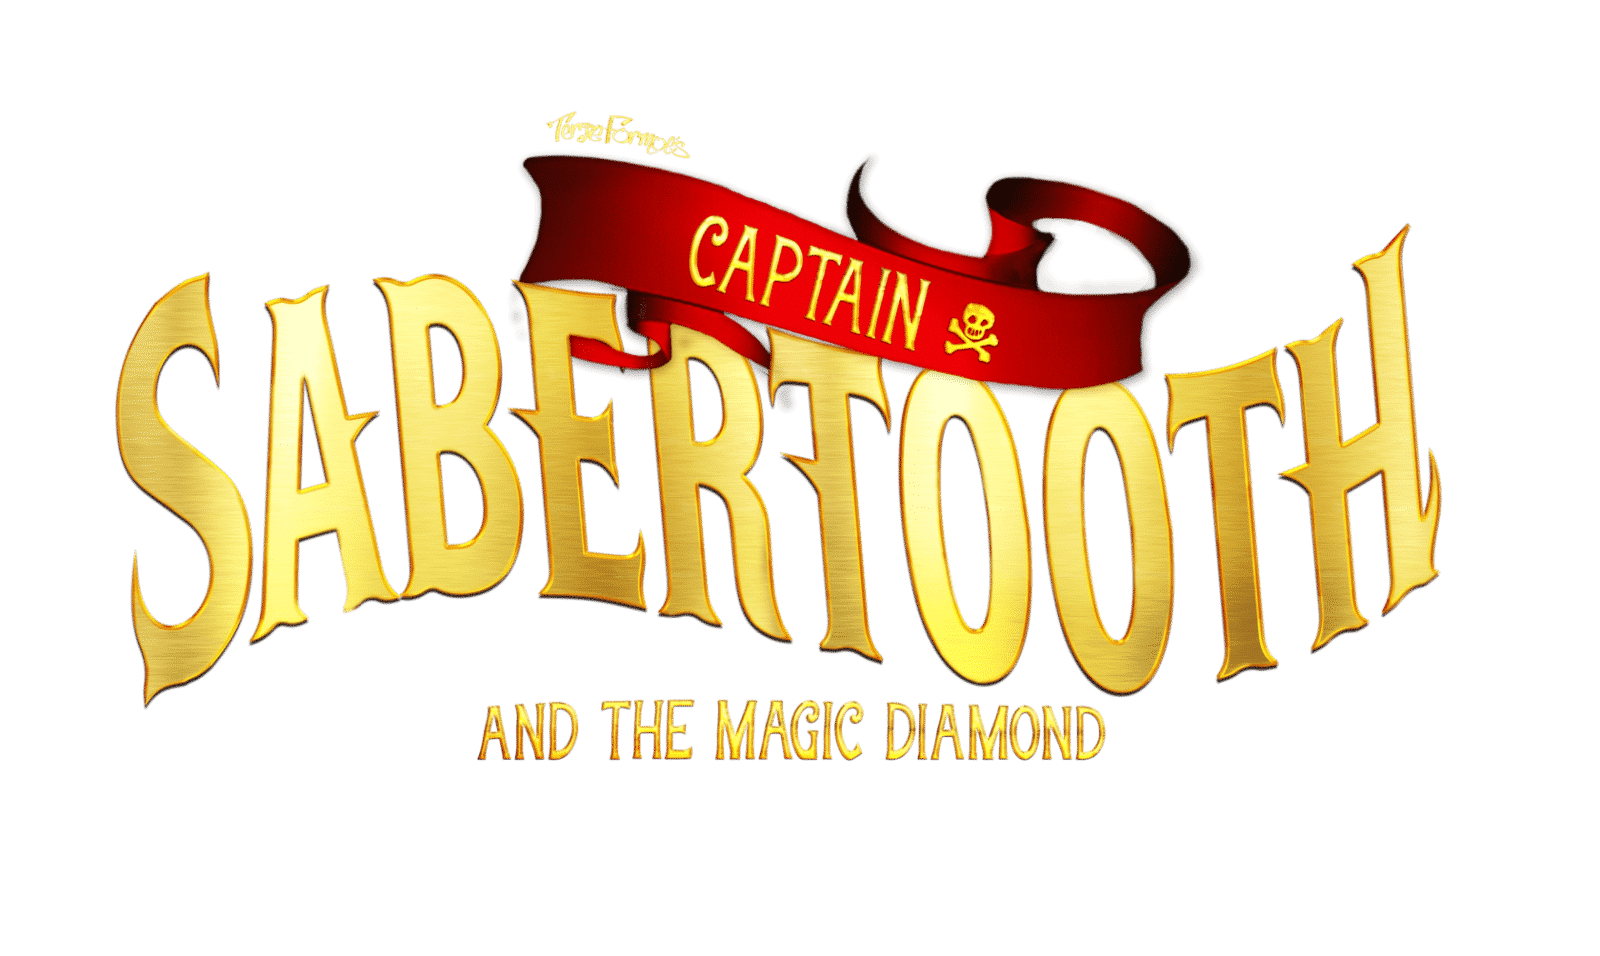 Captain Sabertooth and the Magic Diamond